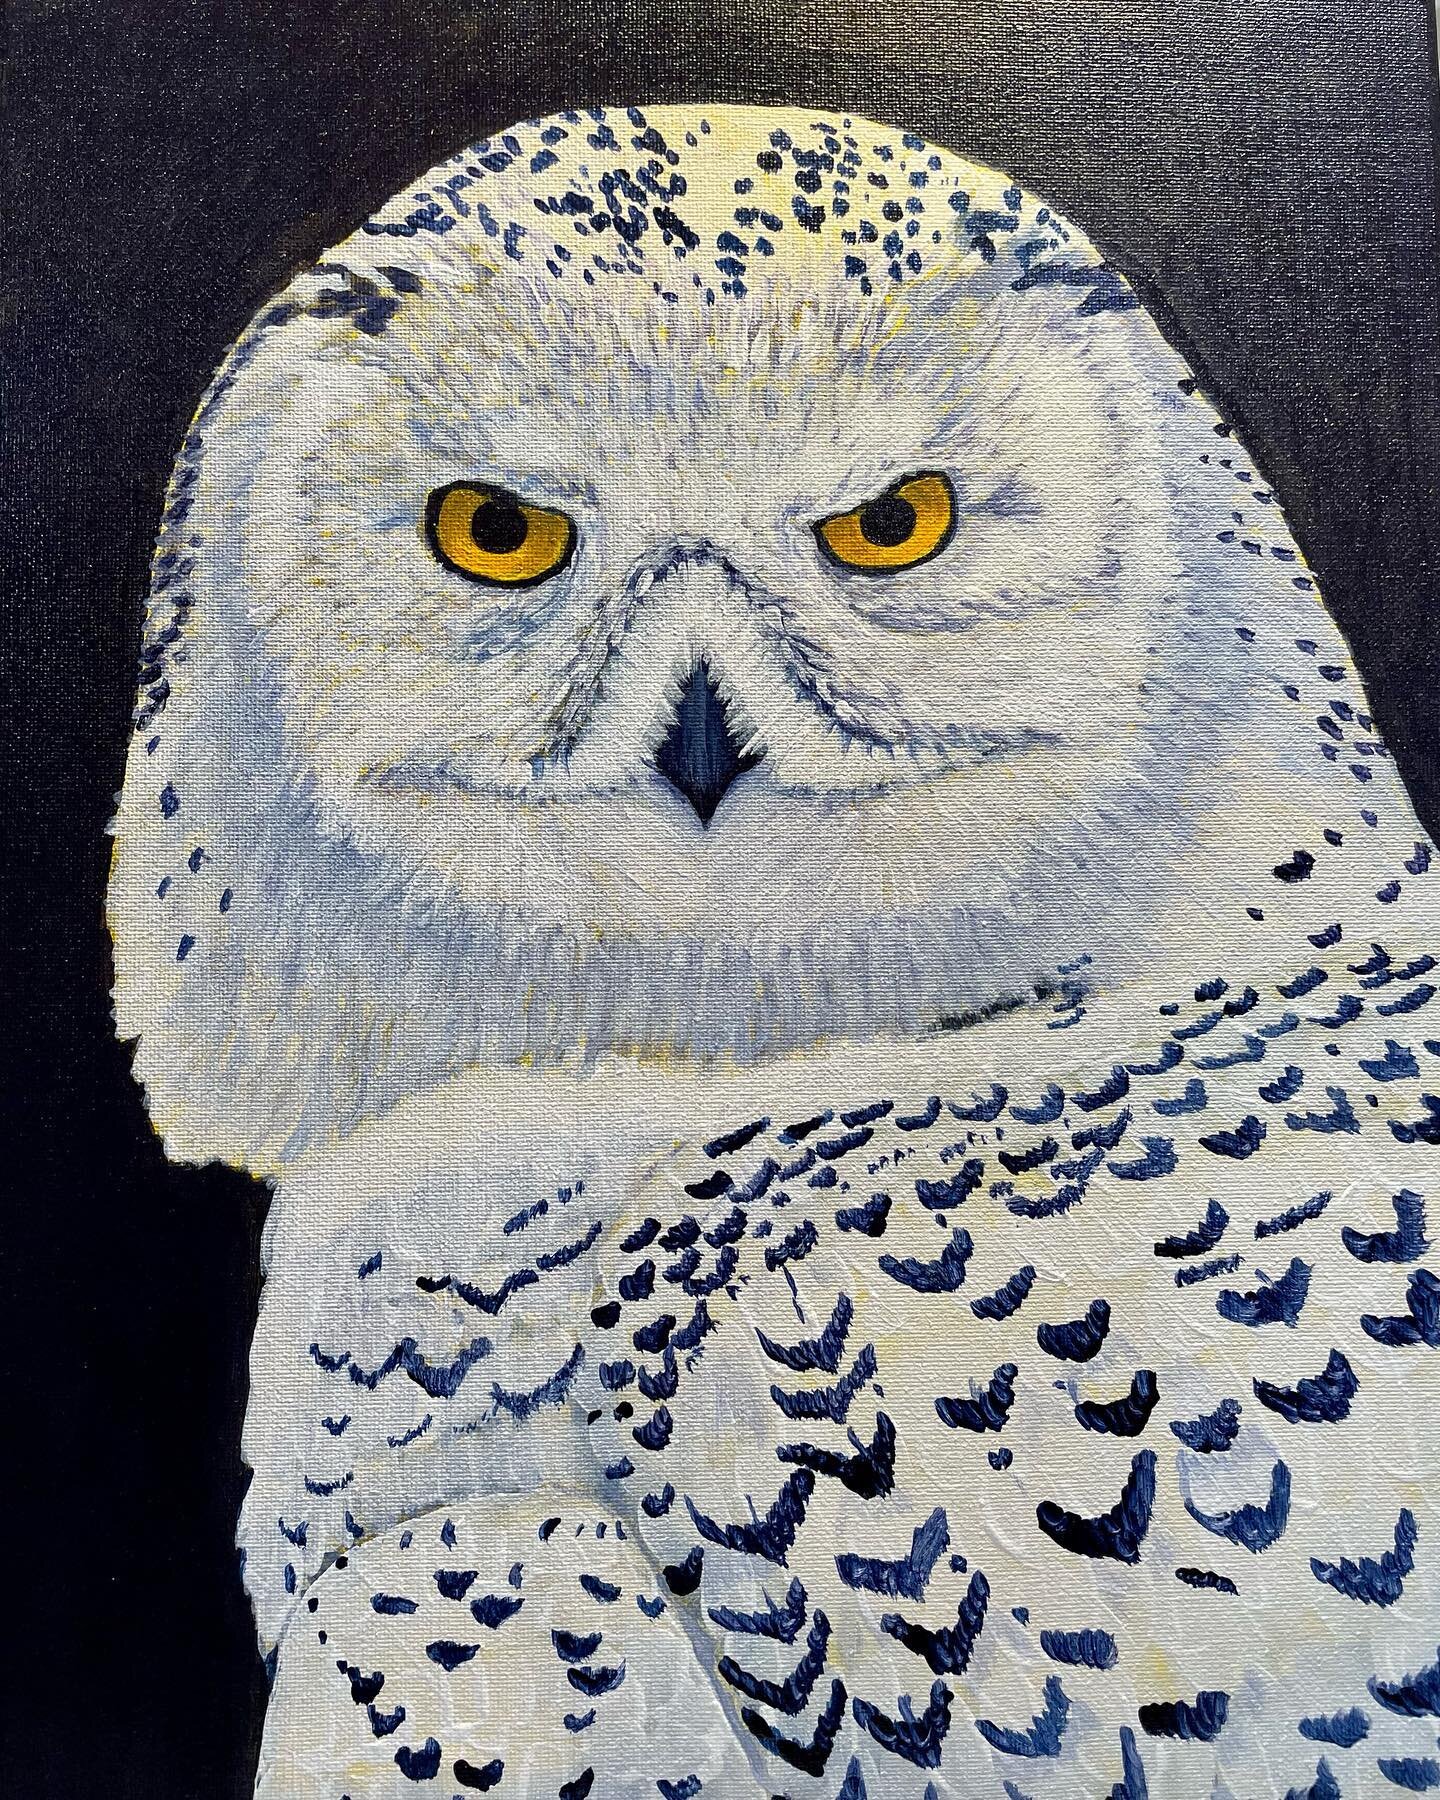 To see my new art and news, sign up for my email list at www.sloangerardstudio.com. #snowowl #artofinstagram #birdofprey #whiteowl #acrylicpainting #raptors